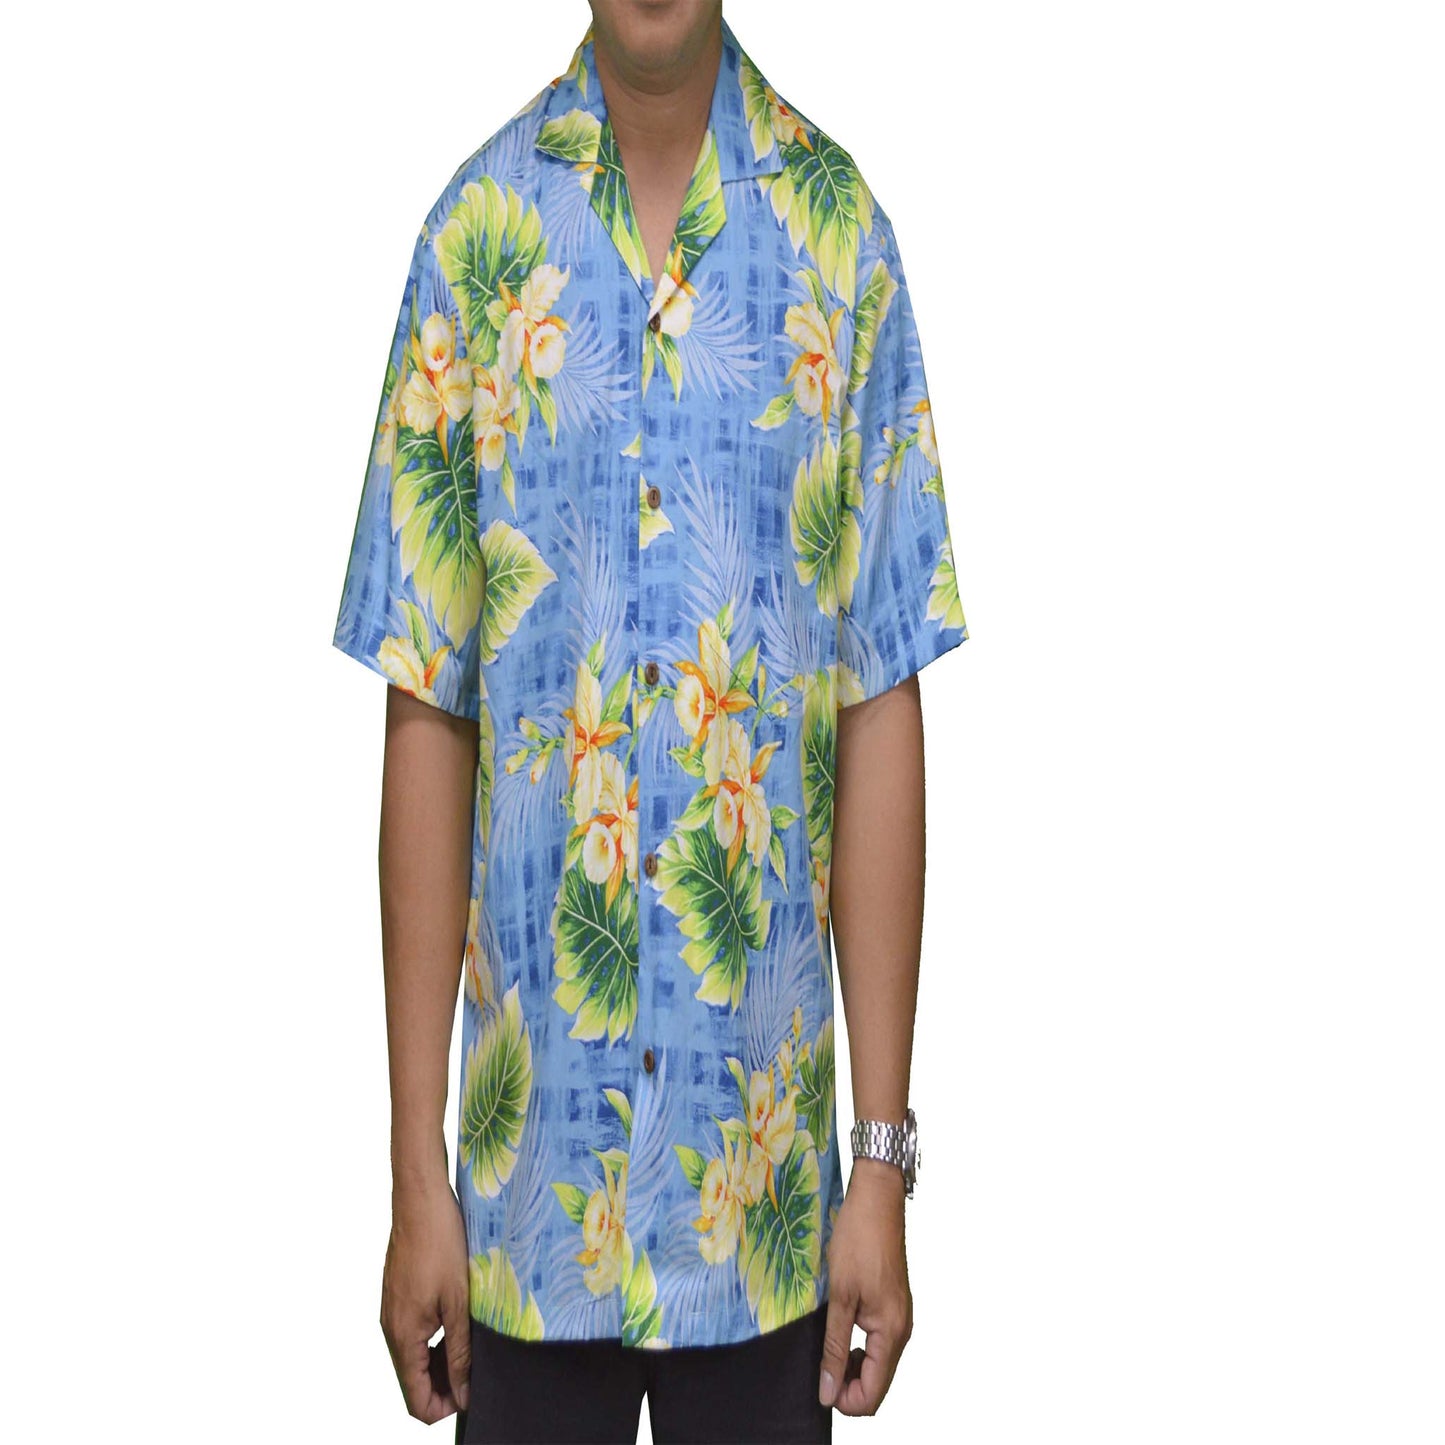 authentic hawaiian cotton aloha shirt with yellow orchid